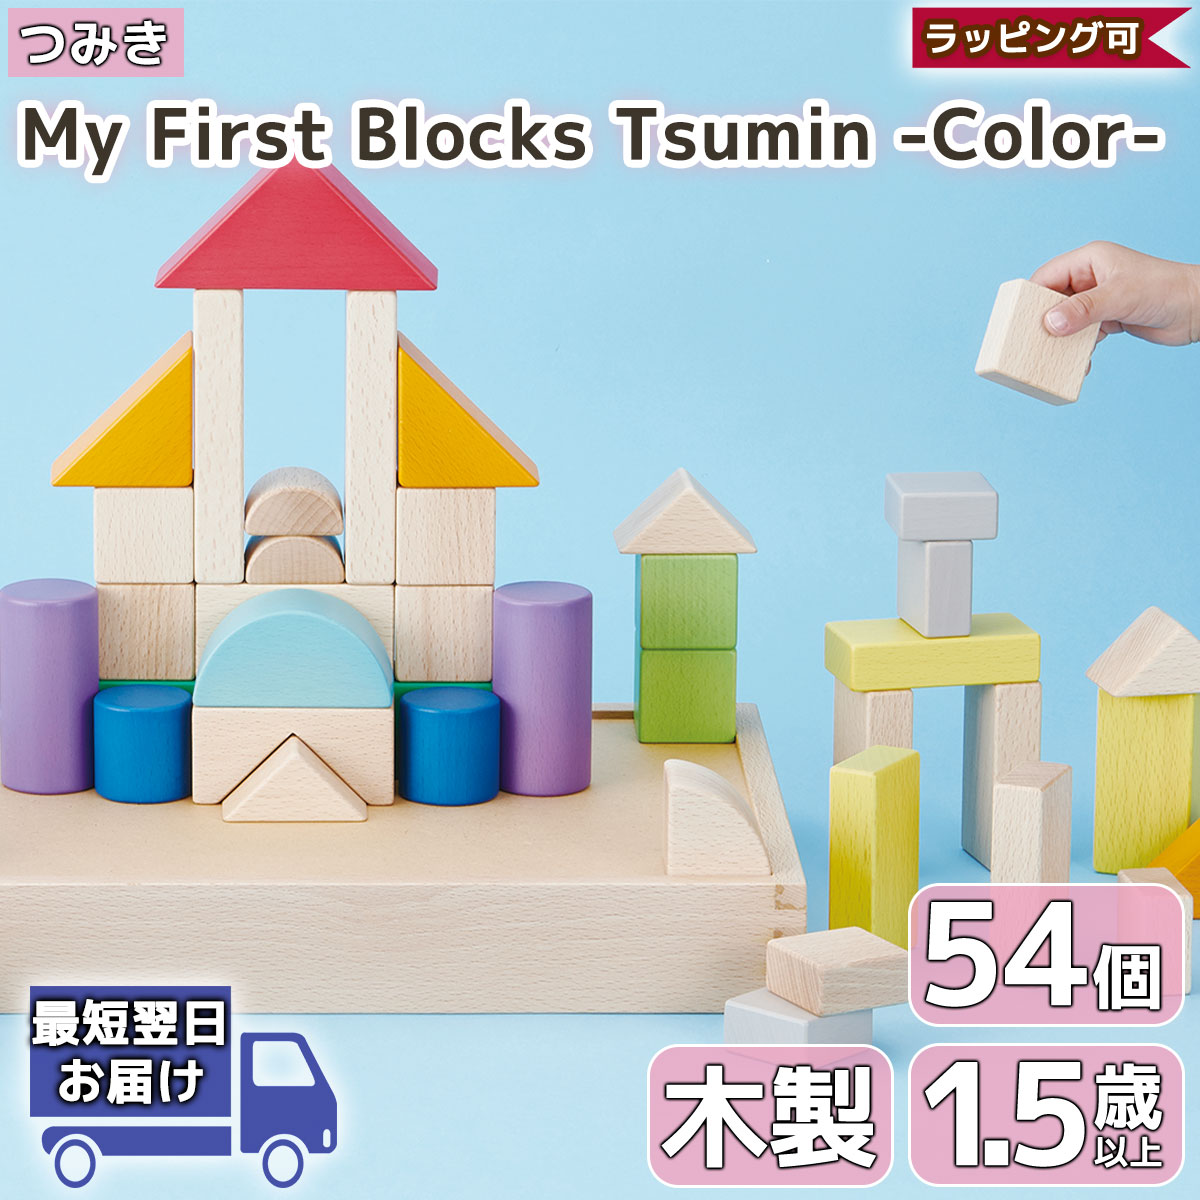 My First Blocks Tsumin Color GENI ジェニ エド・インター 1歳半 知育玩具 知育おもちゃ 1.5歳 父の日 ギフト プレゼント